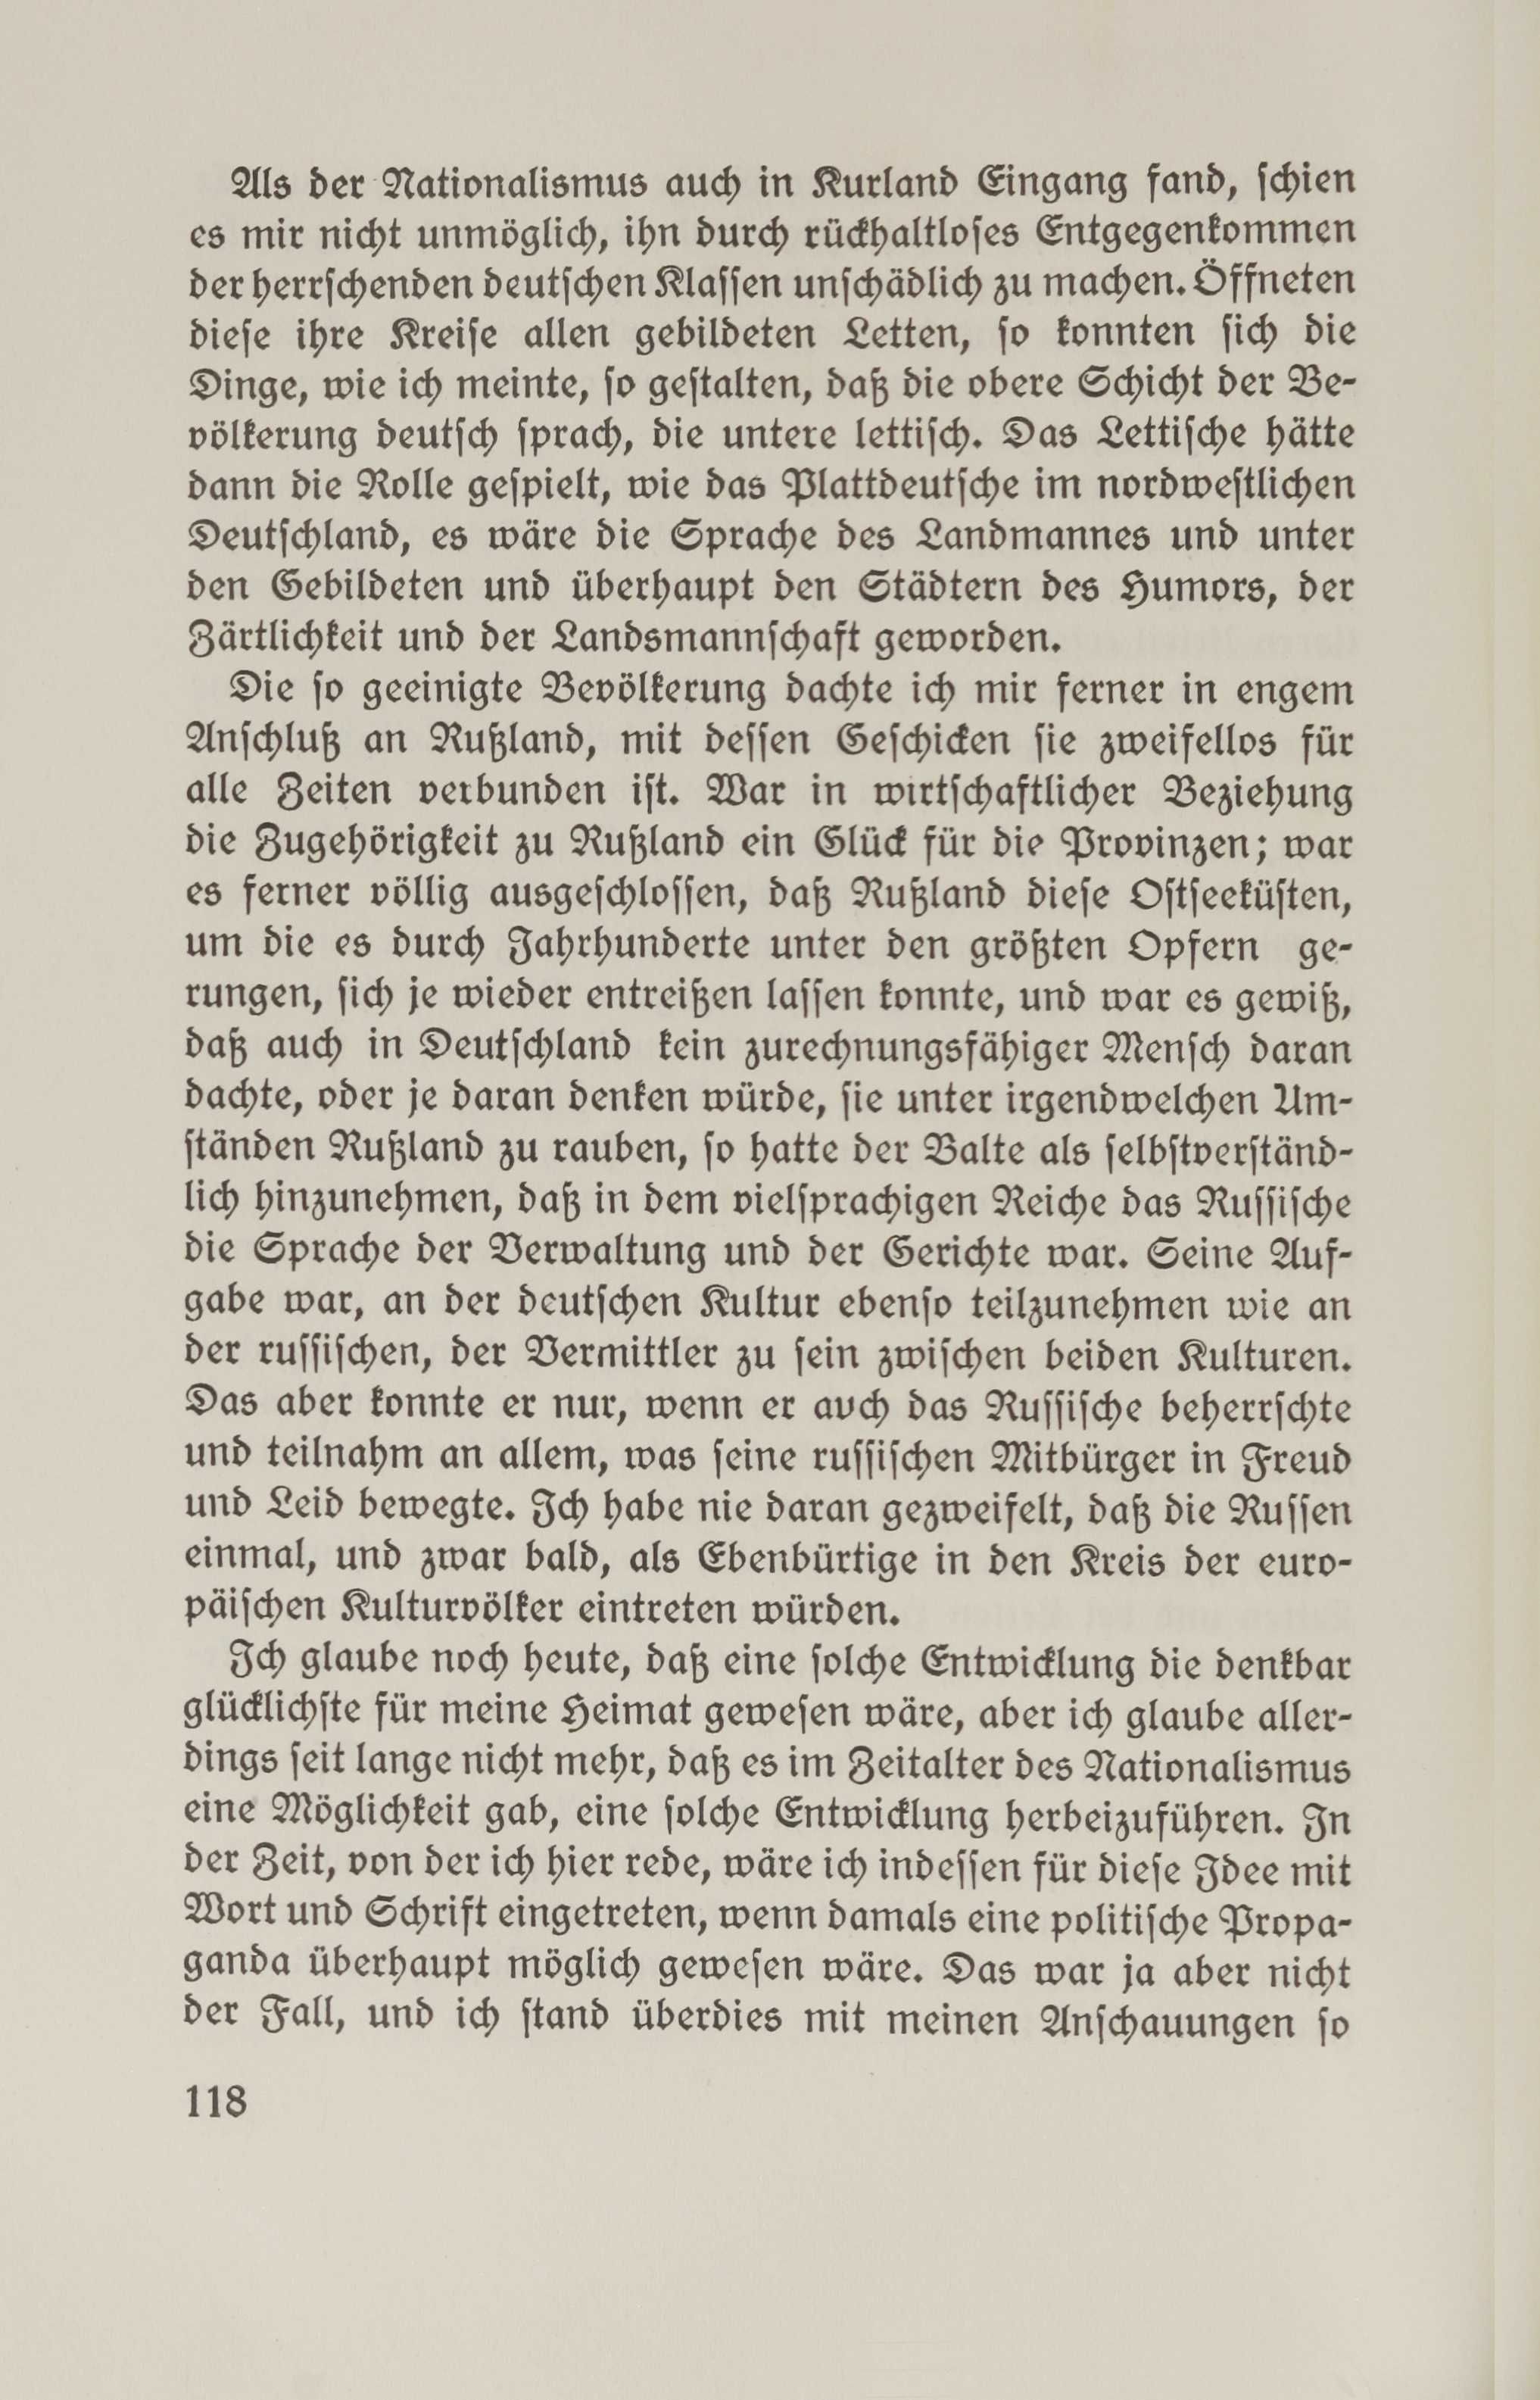 In Riga (1926) | 32. (118) Main body of text